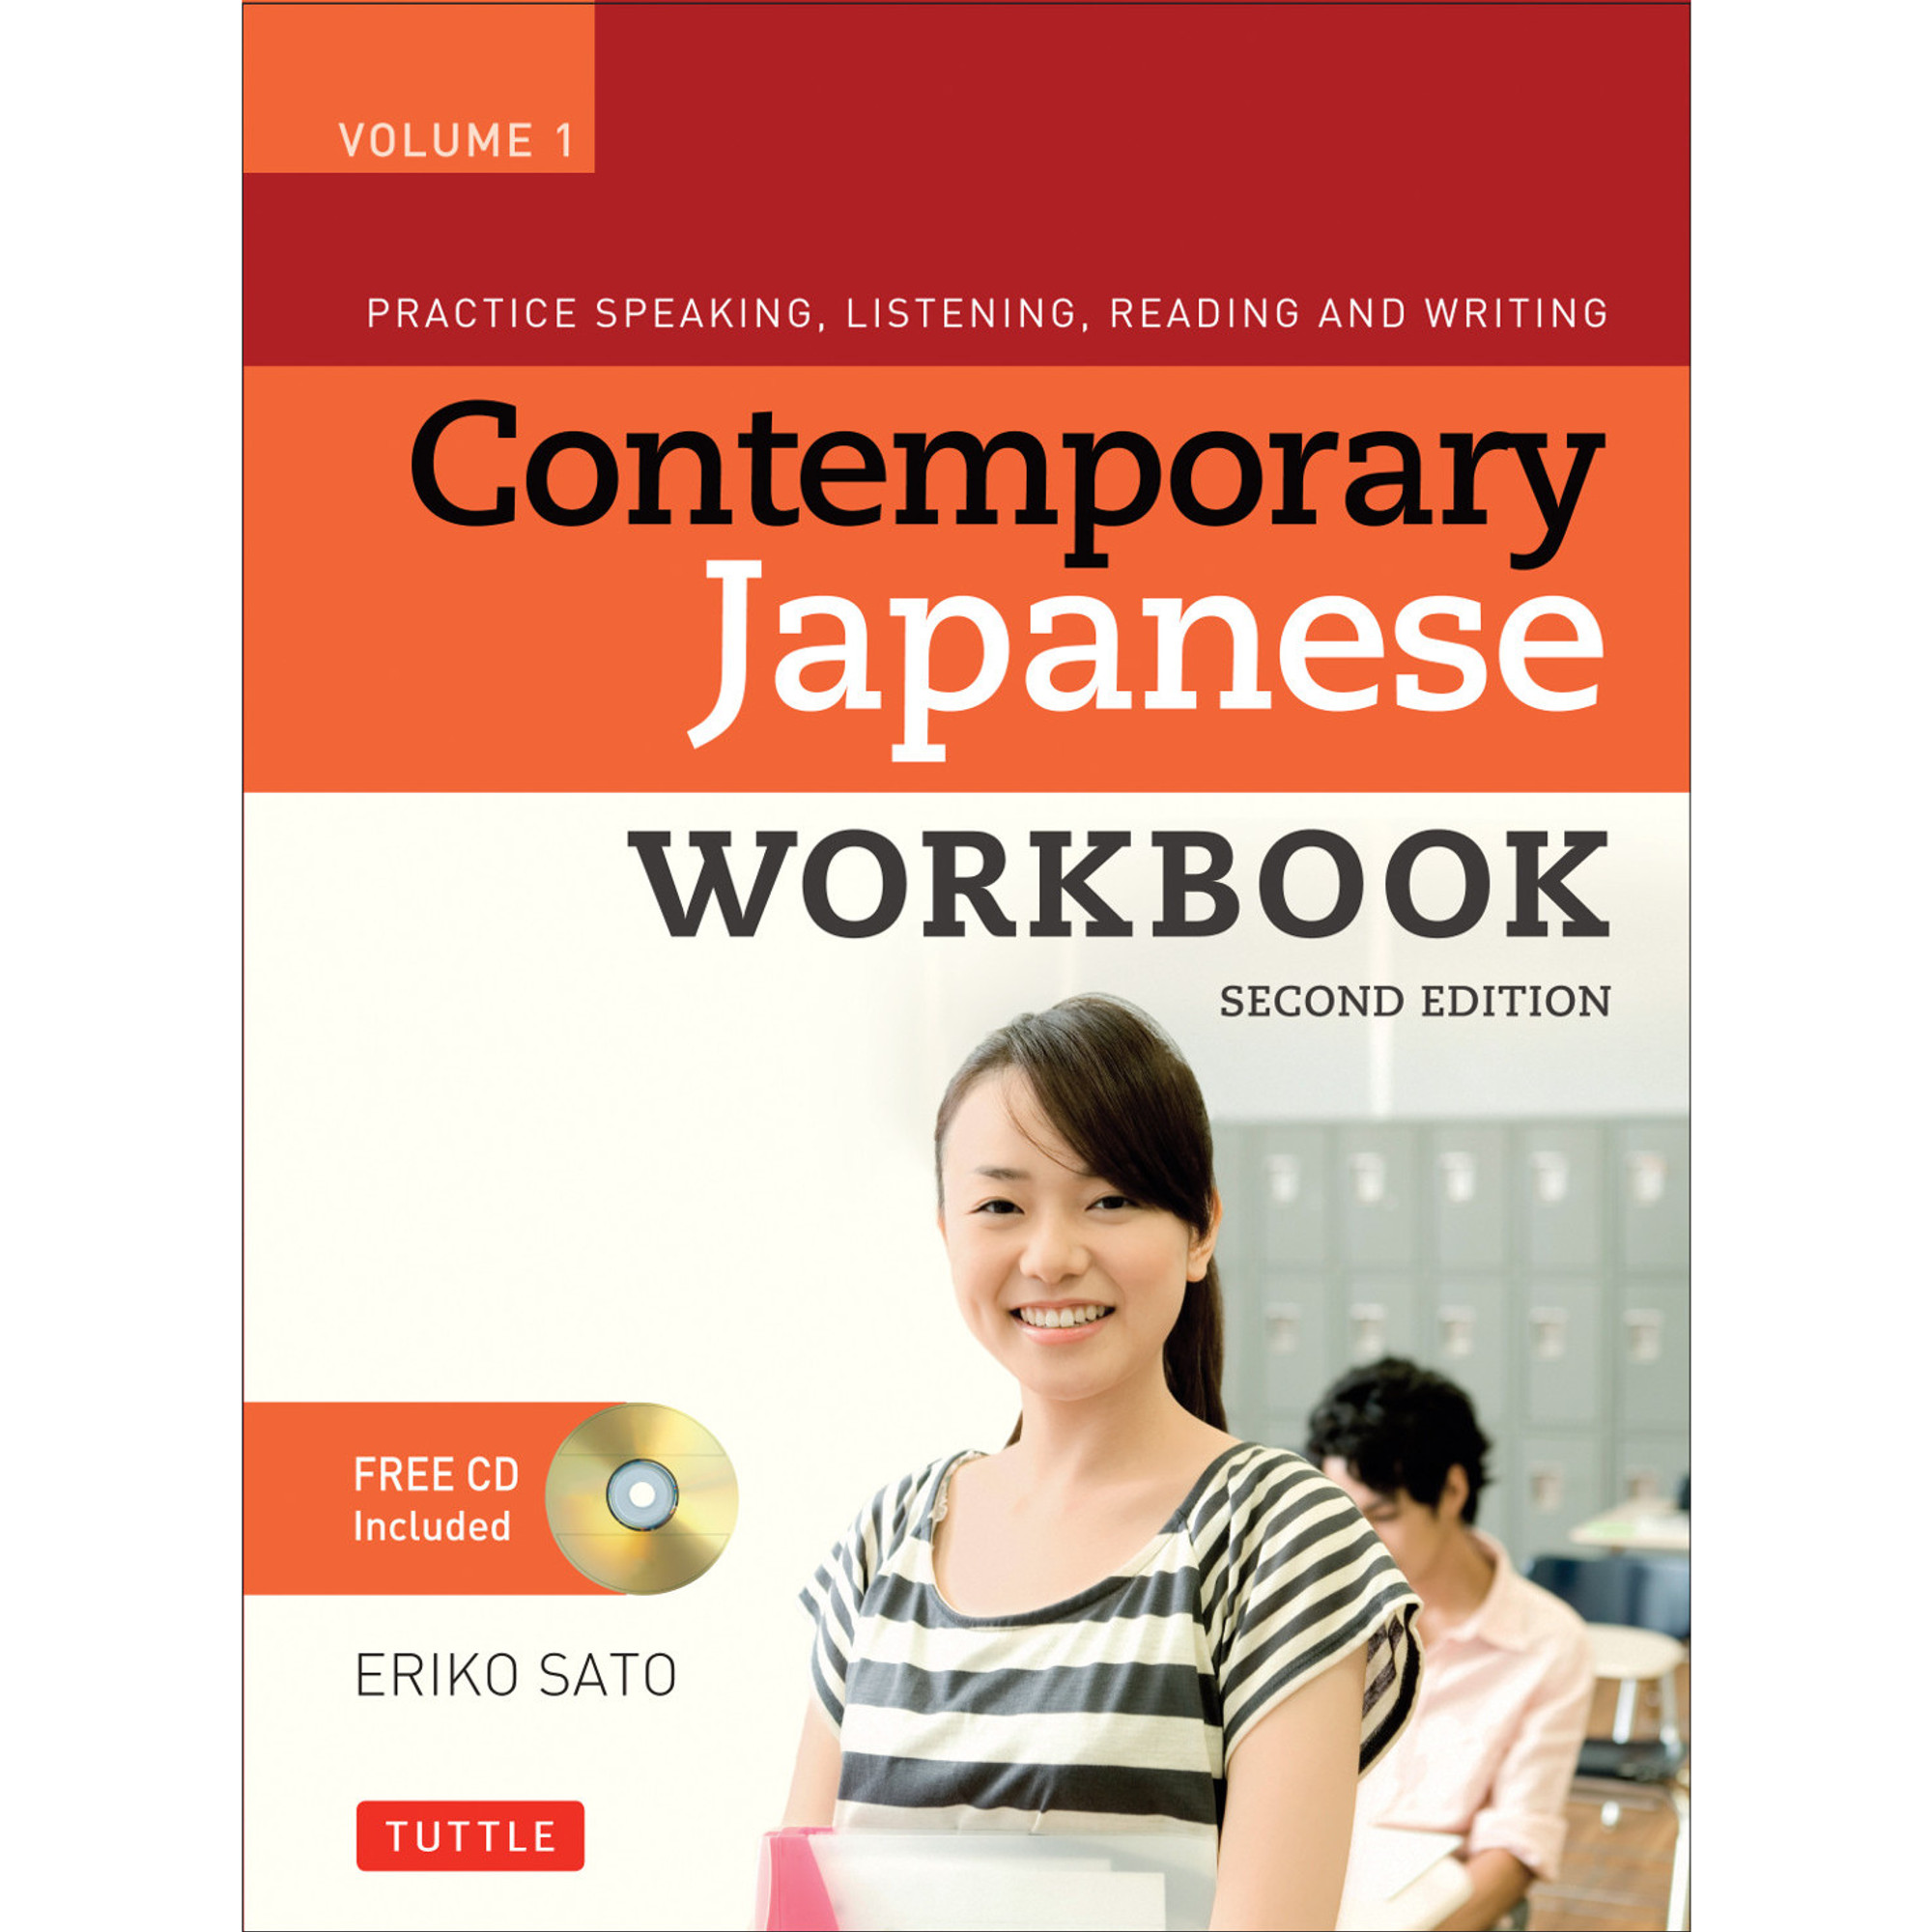 Contemporary Japanese Workbook Volume 1 (9780804847148)